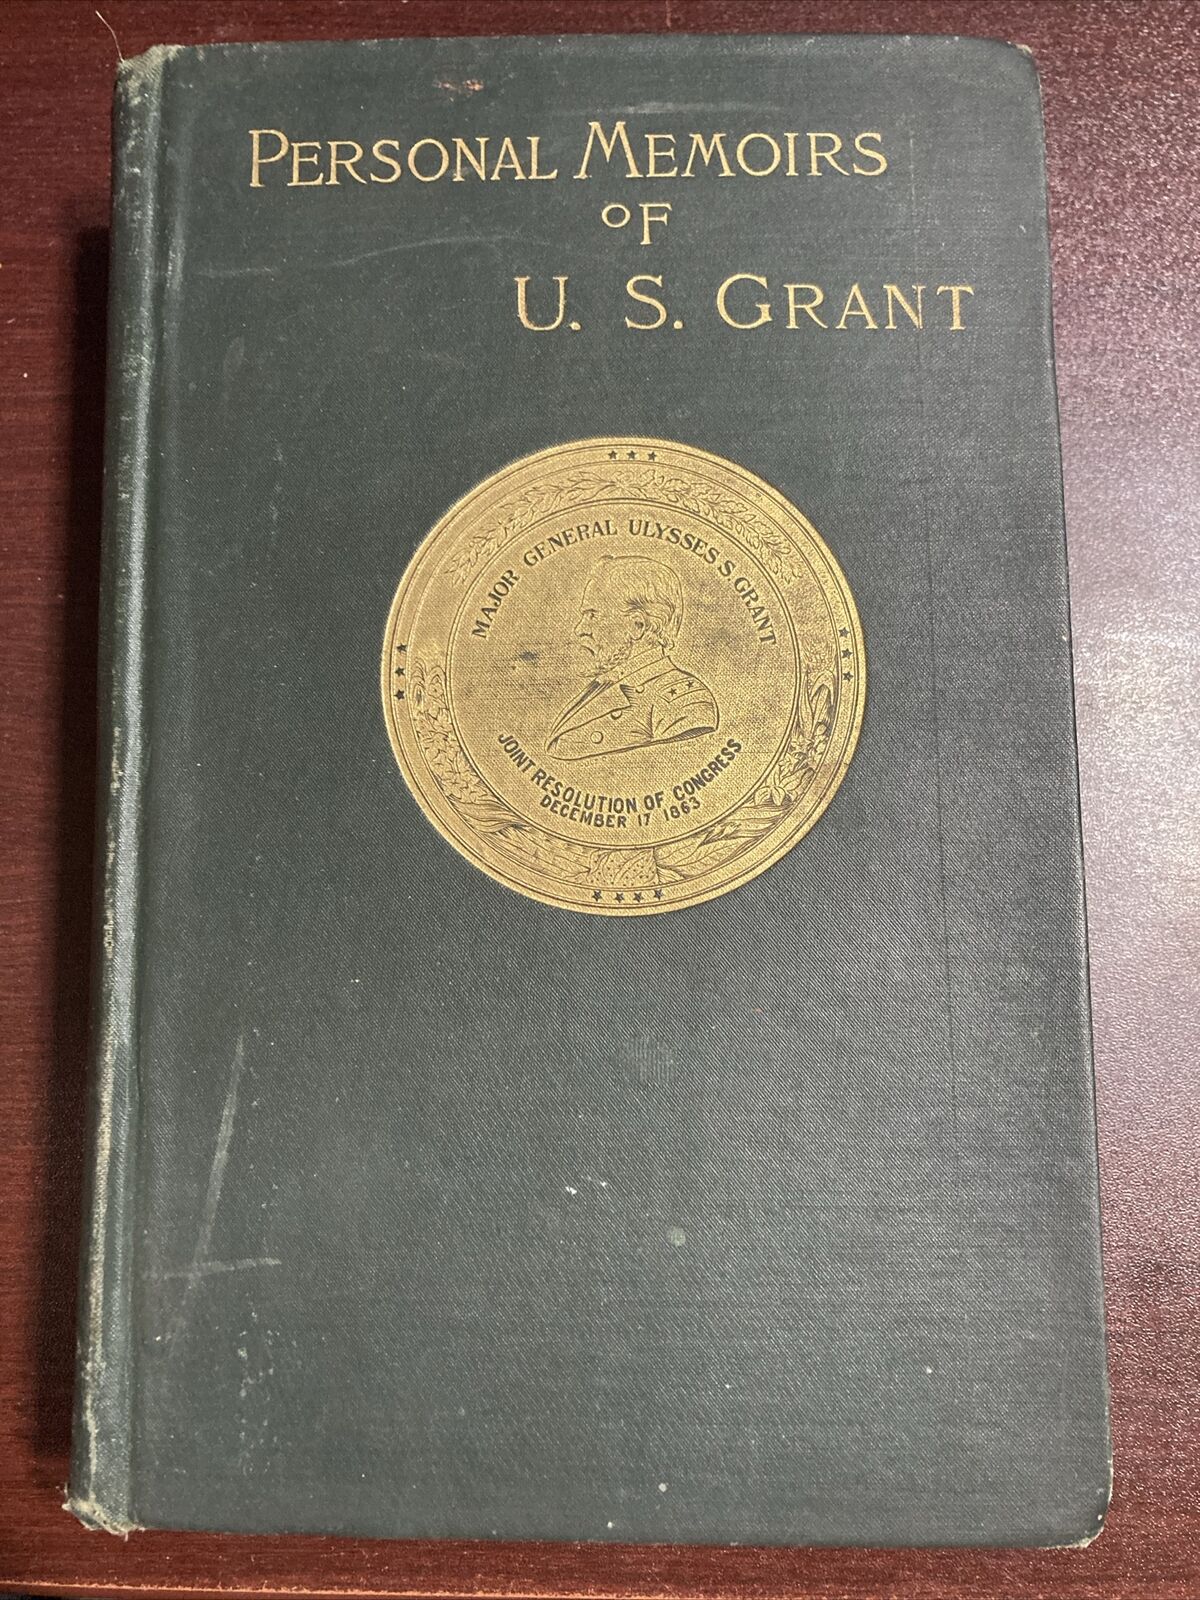 ANTIQUE - PERSONAL MEMOIRS OF U.S. GRANT - VOL. 2 - 1885 HARDCOVER BOOK